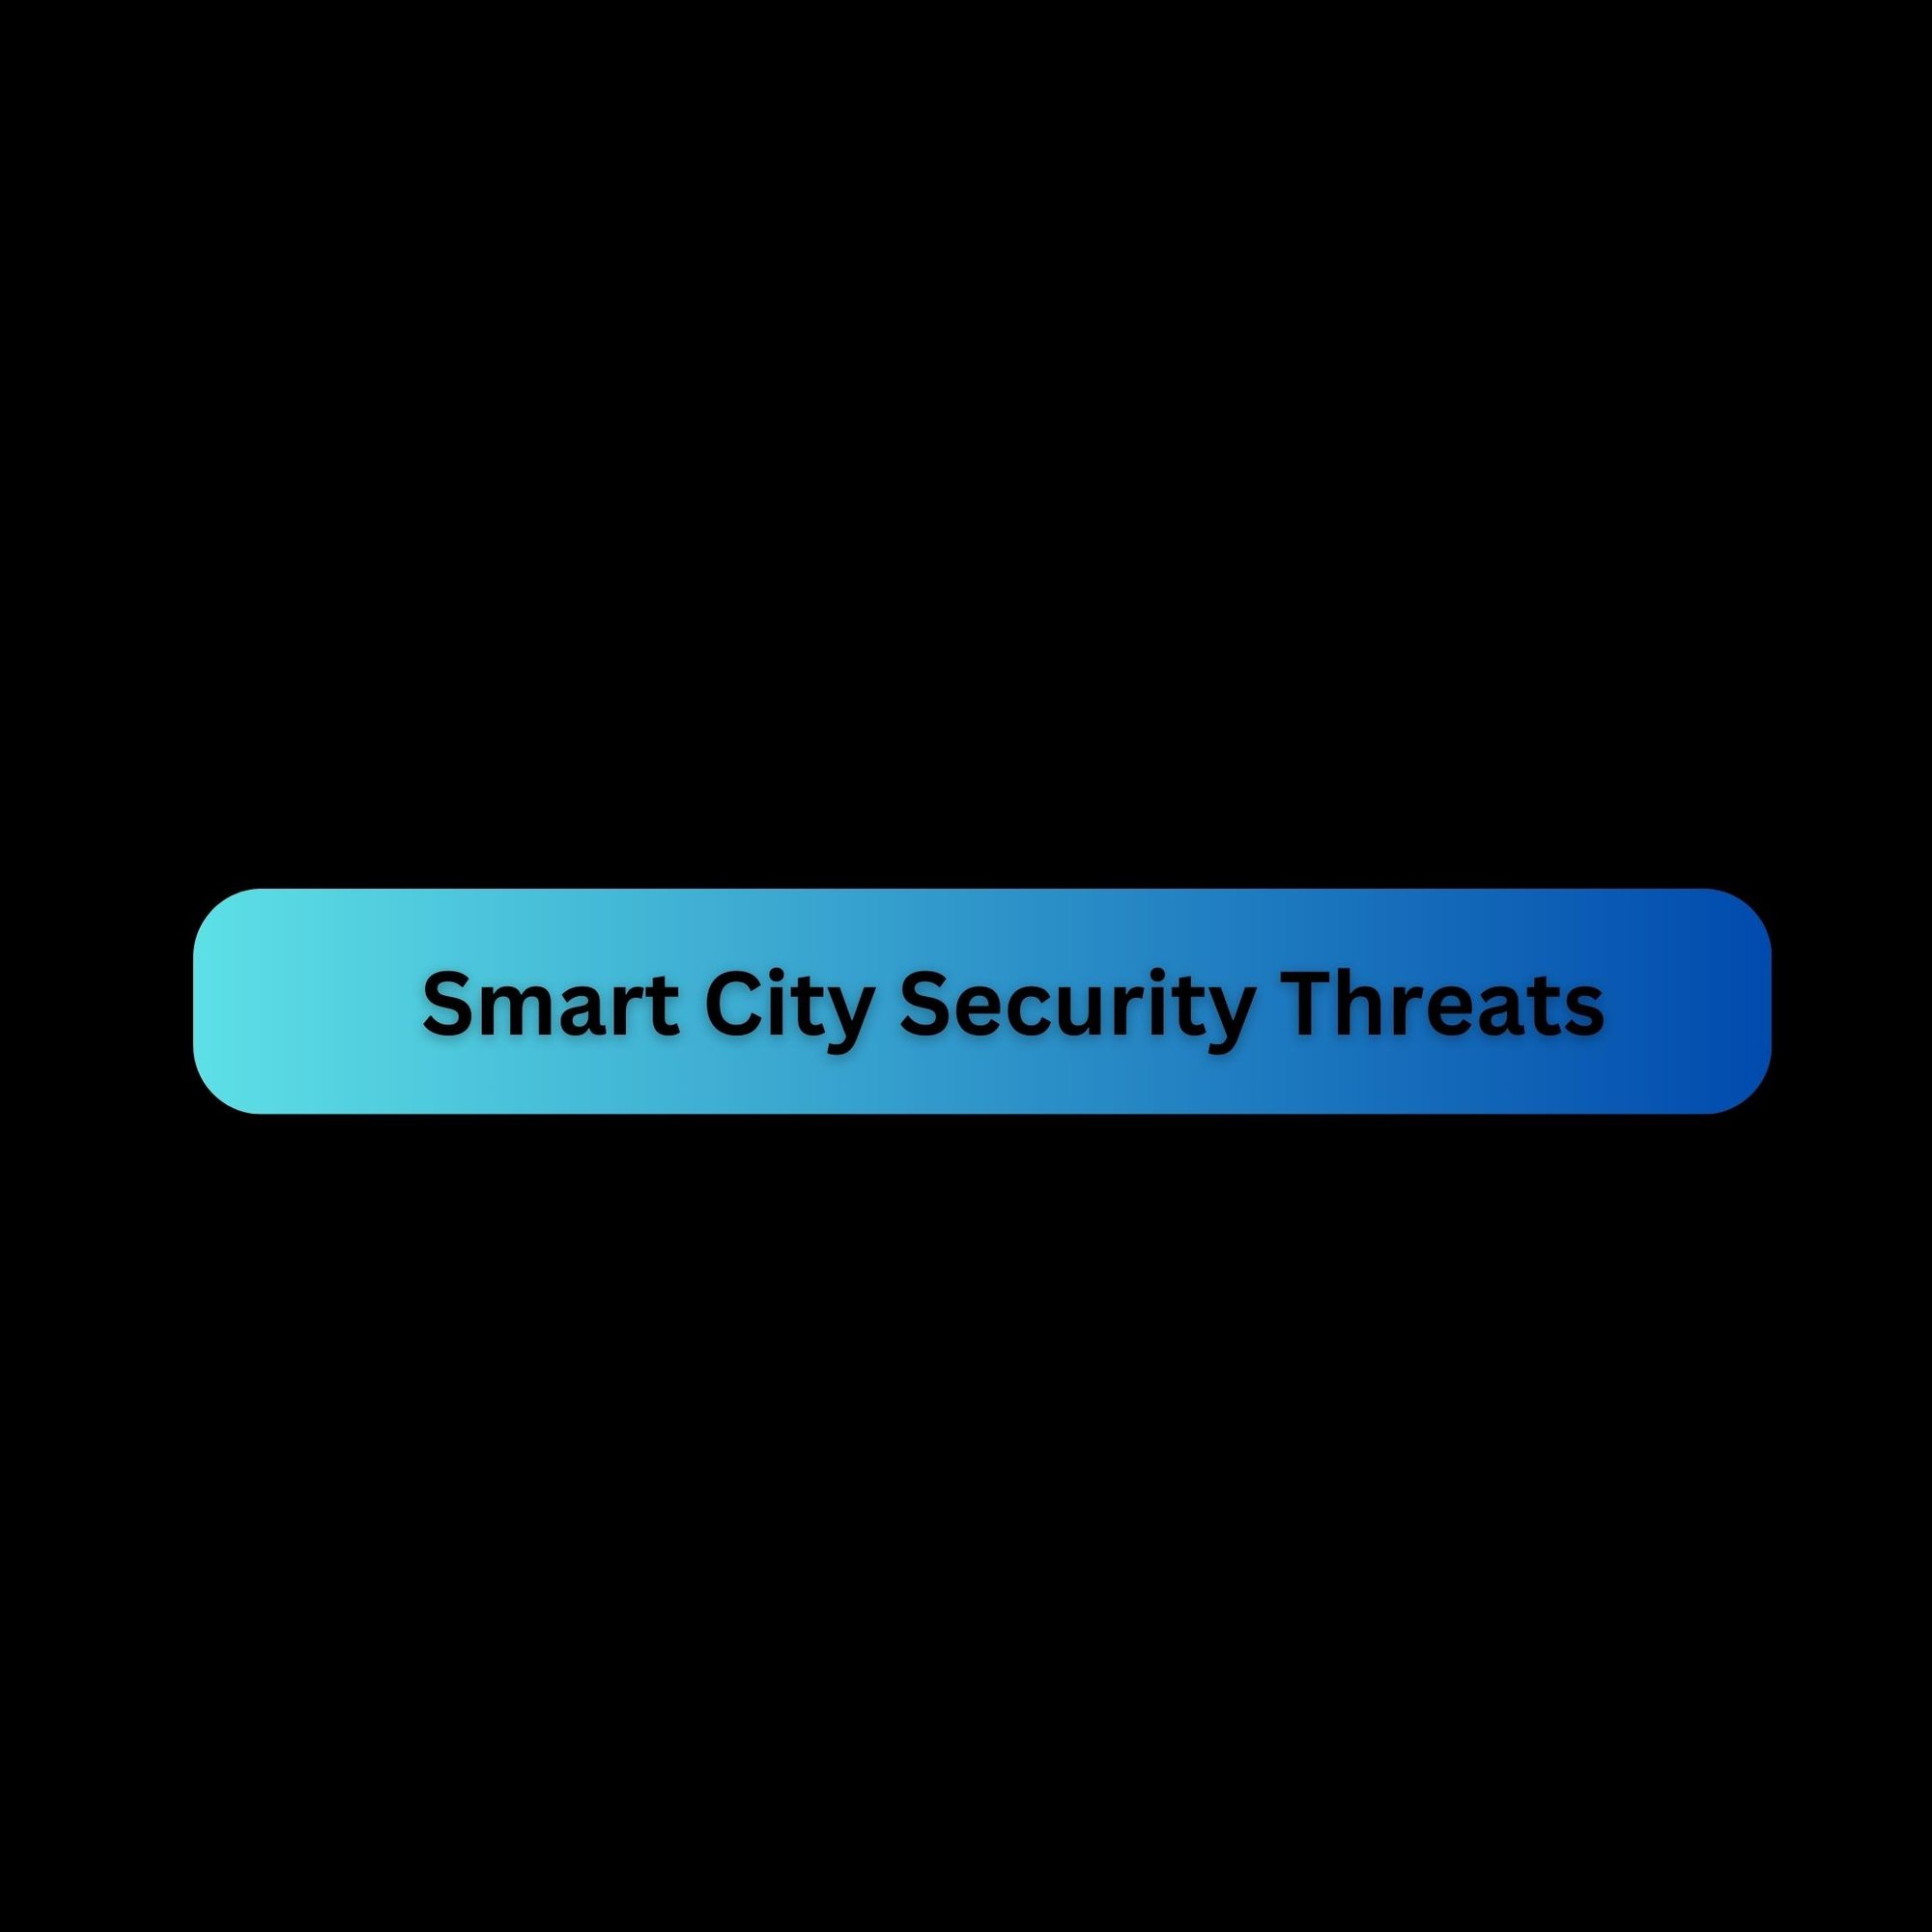 Smart city security threats